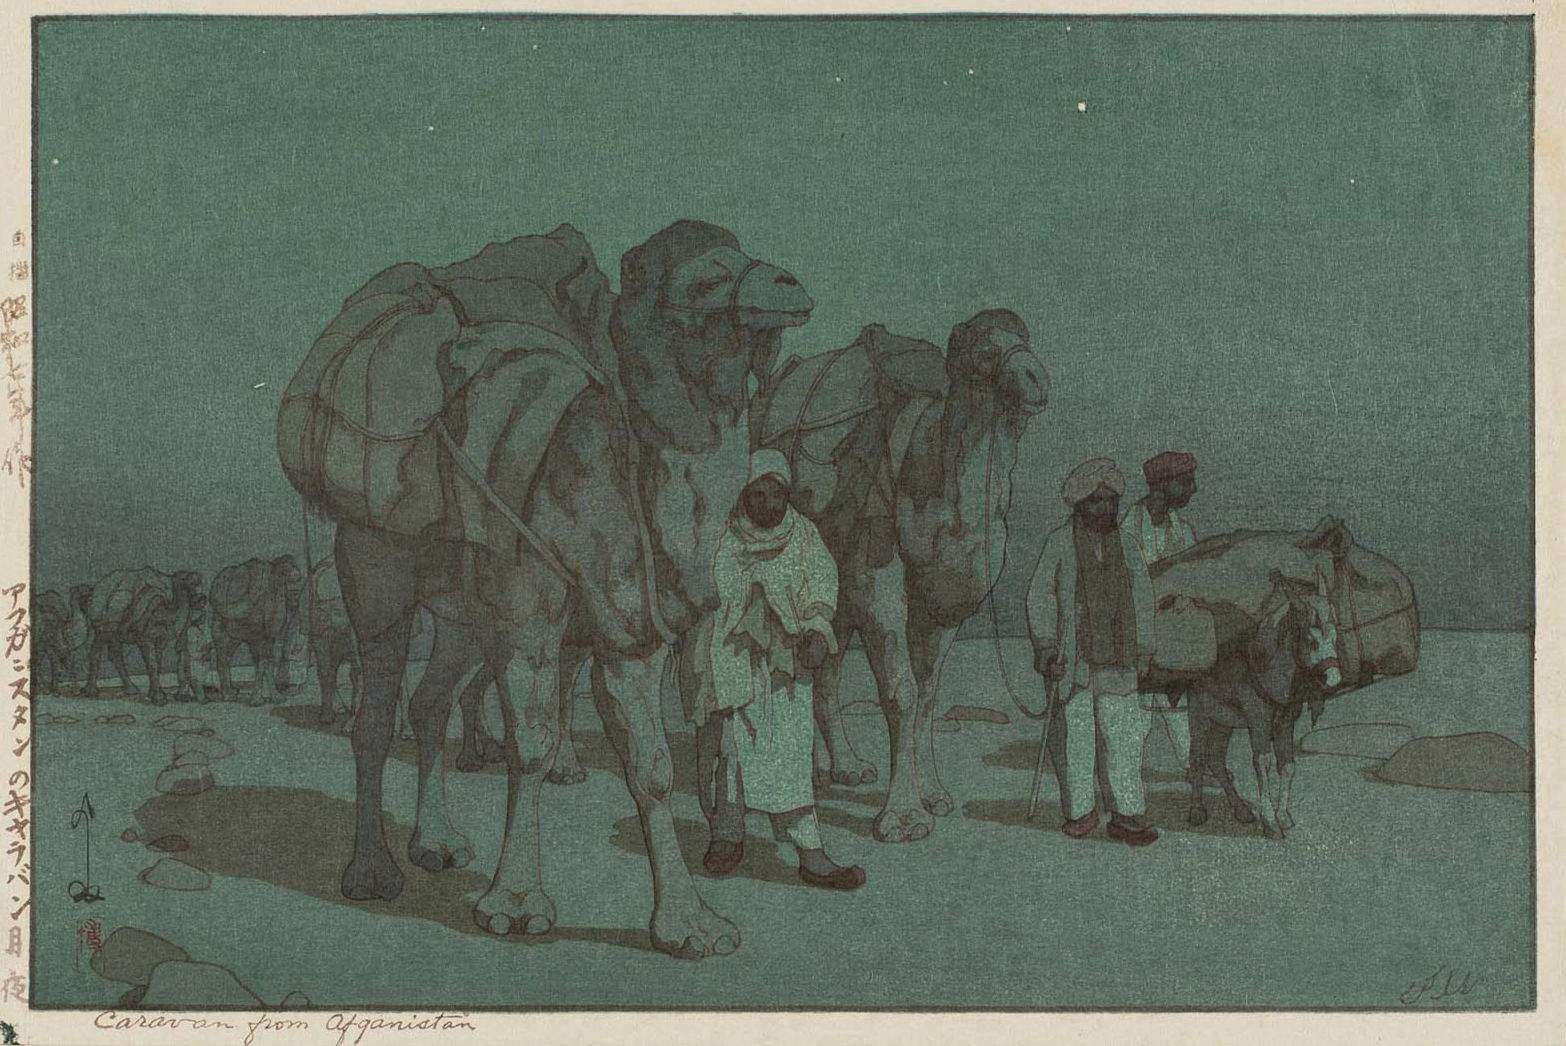 Hiroshi Yoshida “Caravan from Afghanistan [Moonlight]” 1932 woodblock print